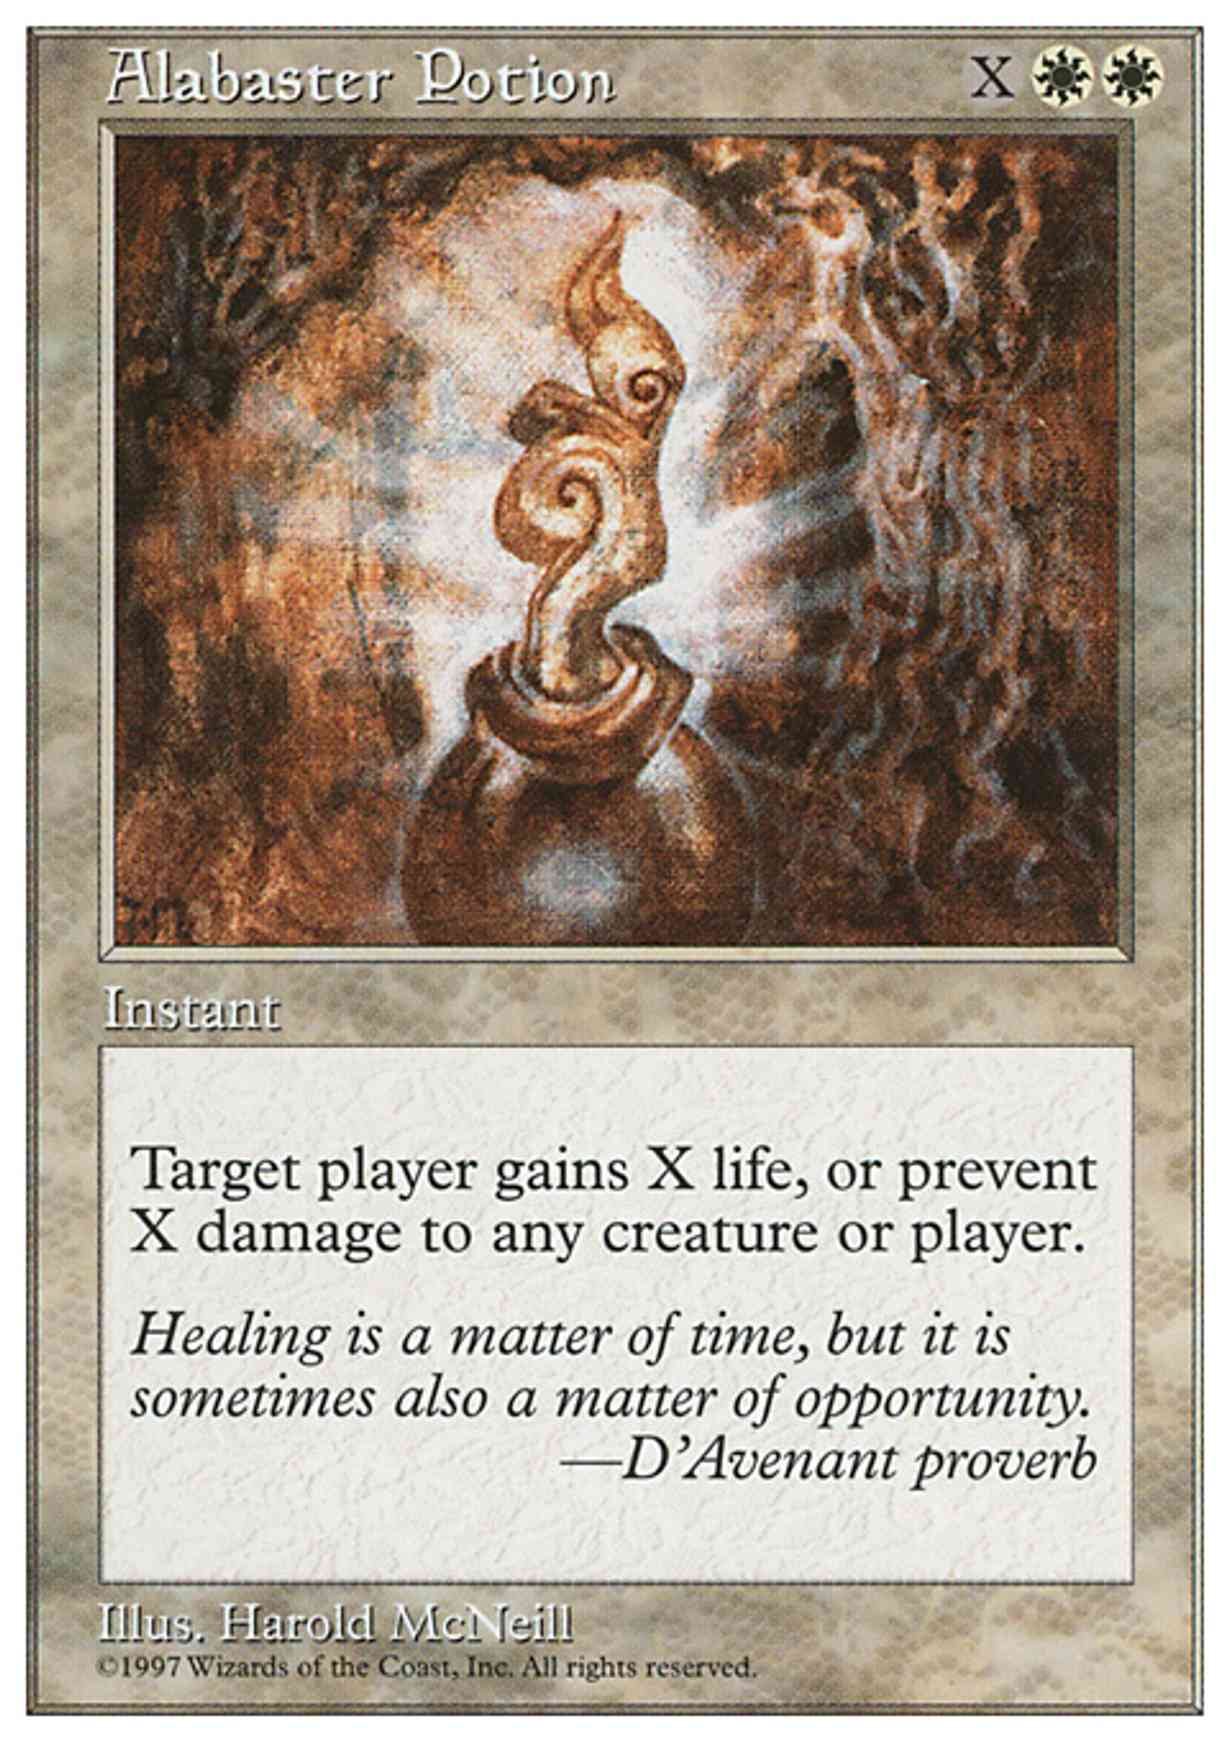 Alabaster Potion magic card front